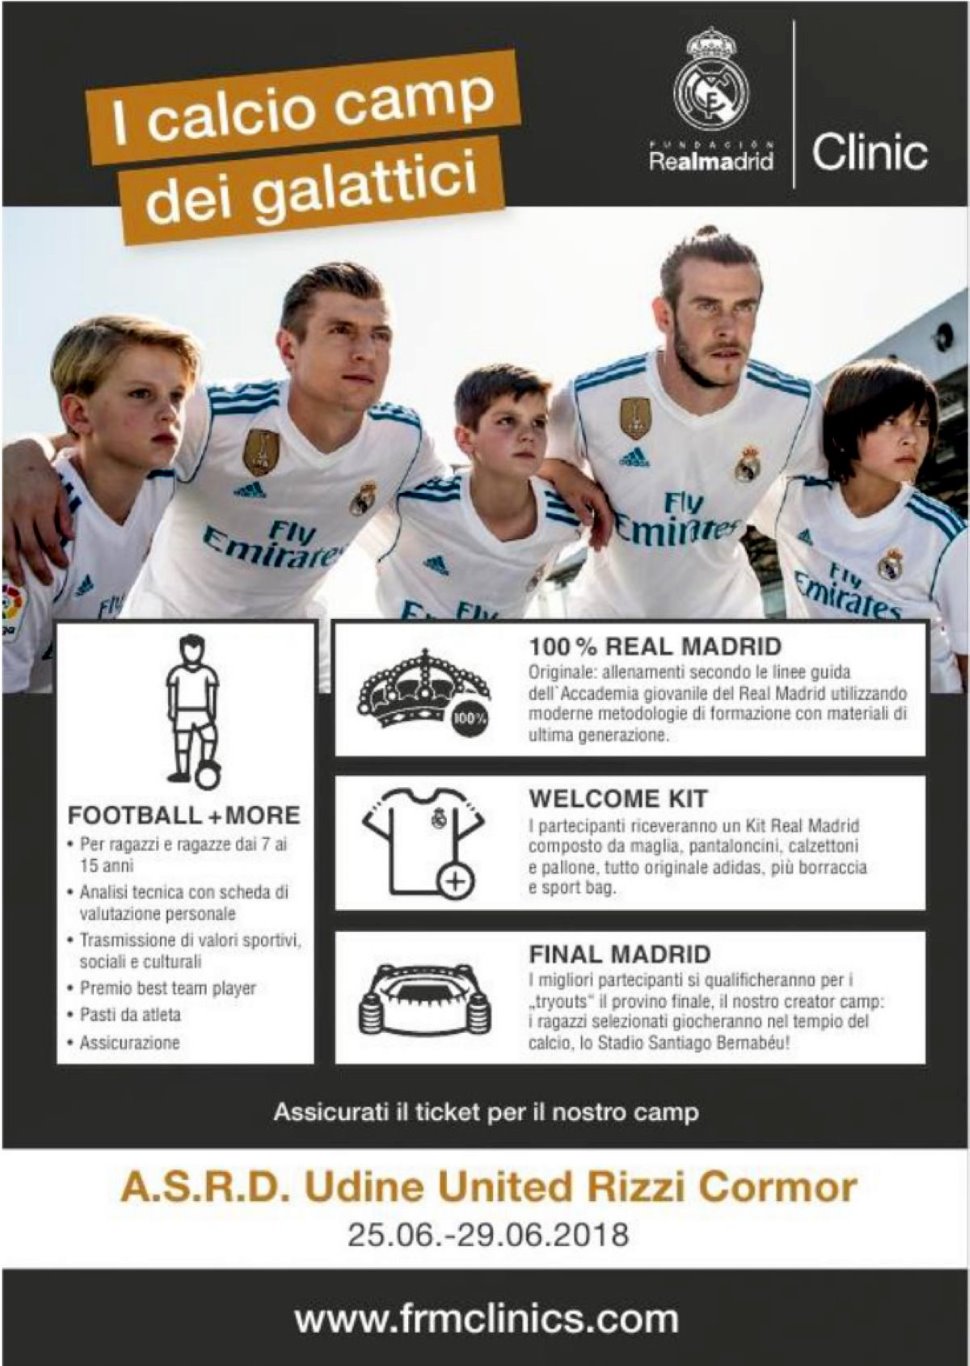 Camp Real Madrid Clinics 2018